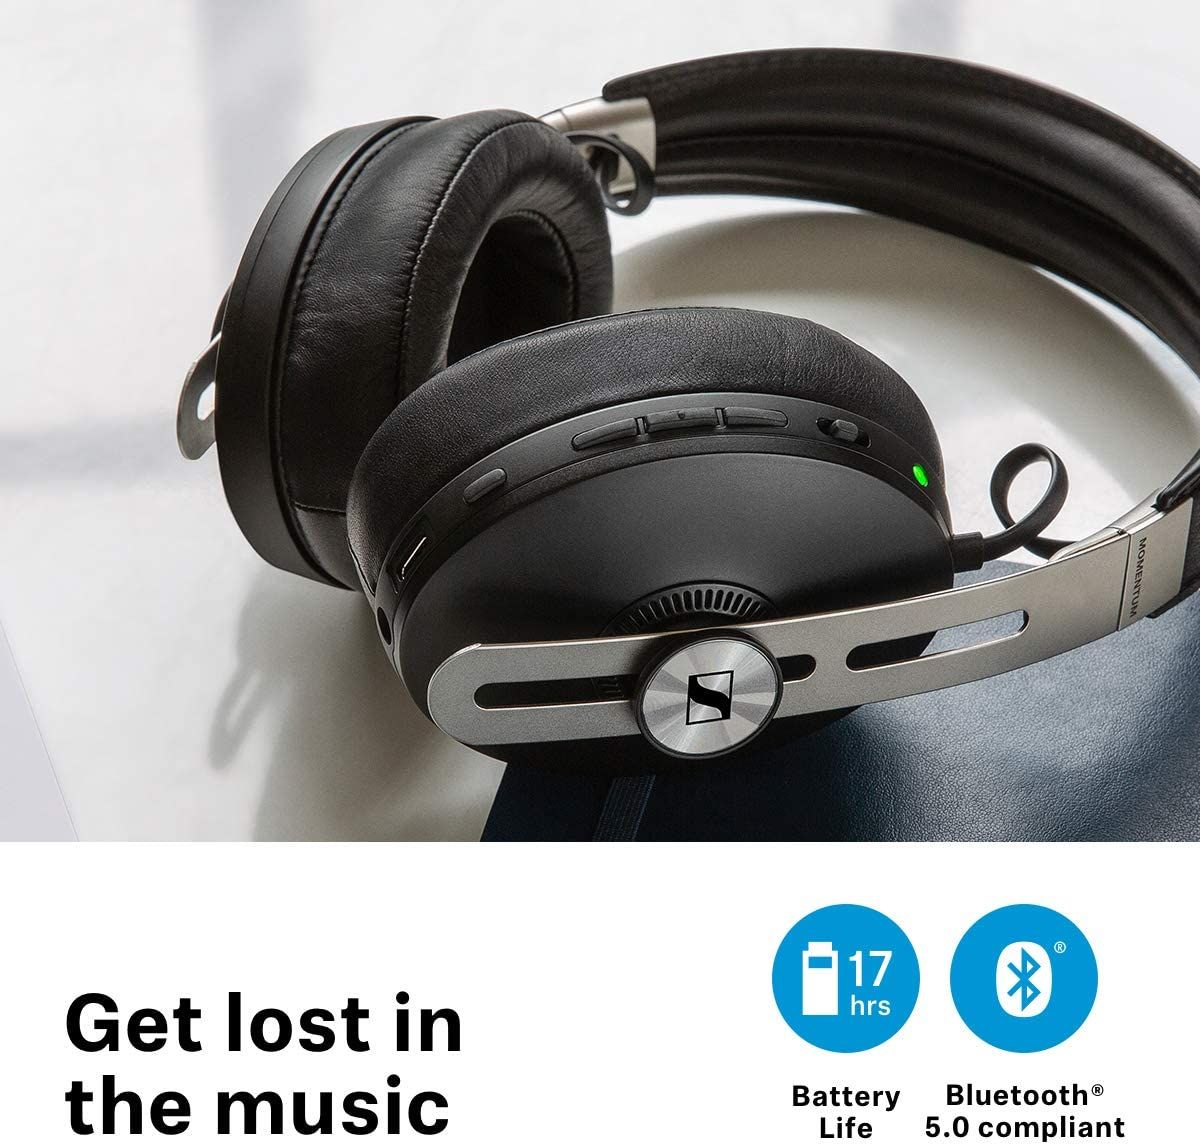 SENNHEISER Momentum 3 Wireless Noise Cancelling Headphones specs